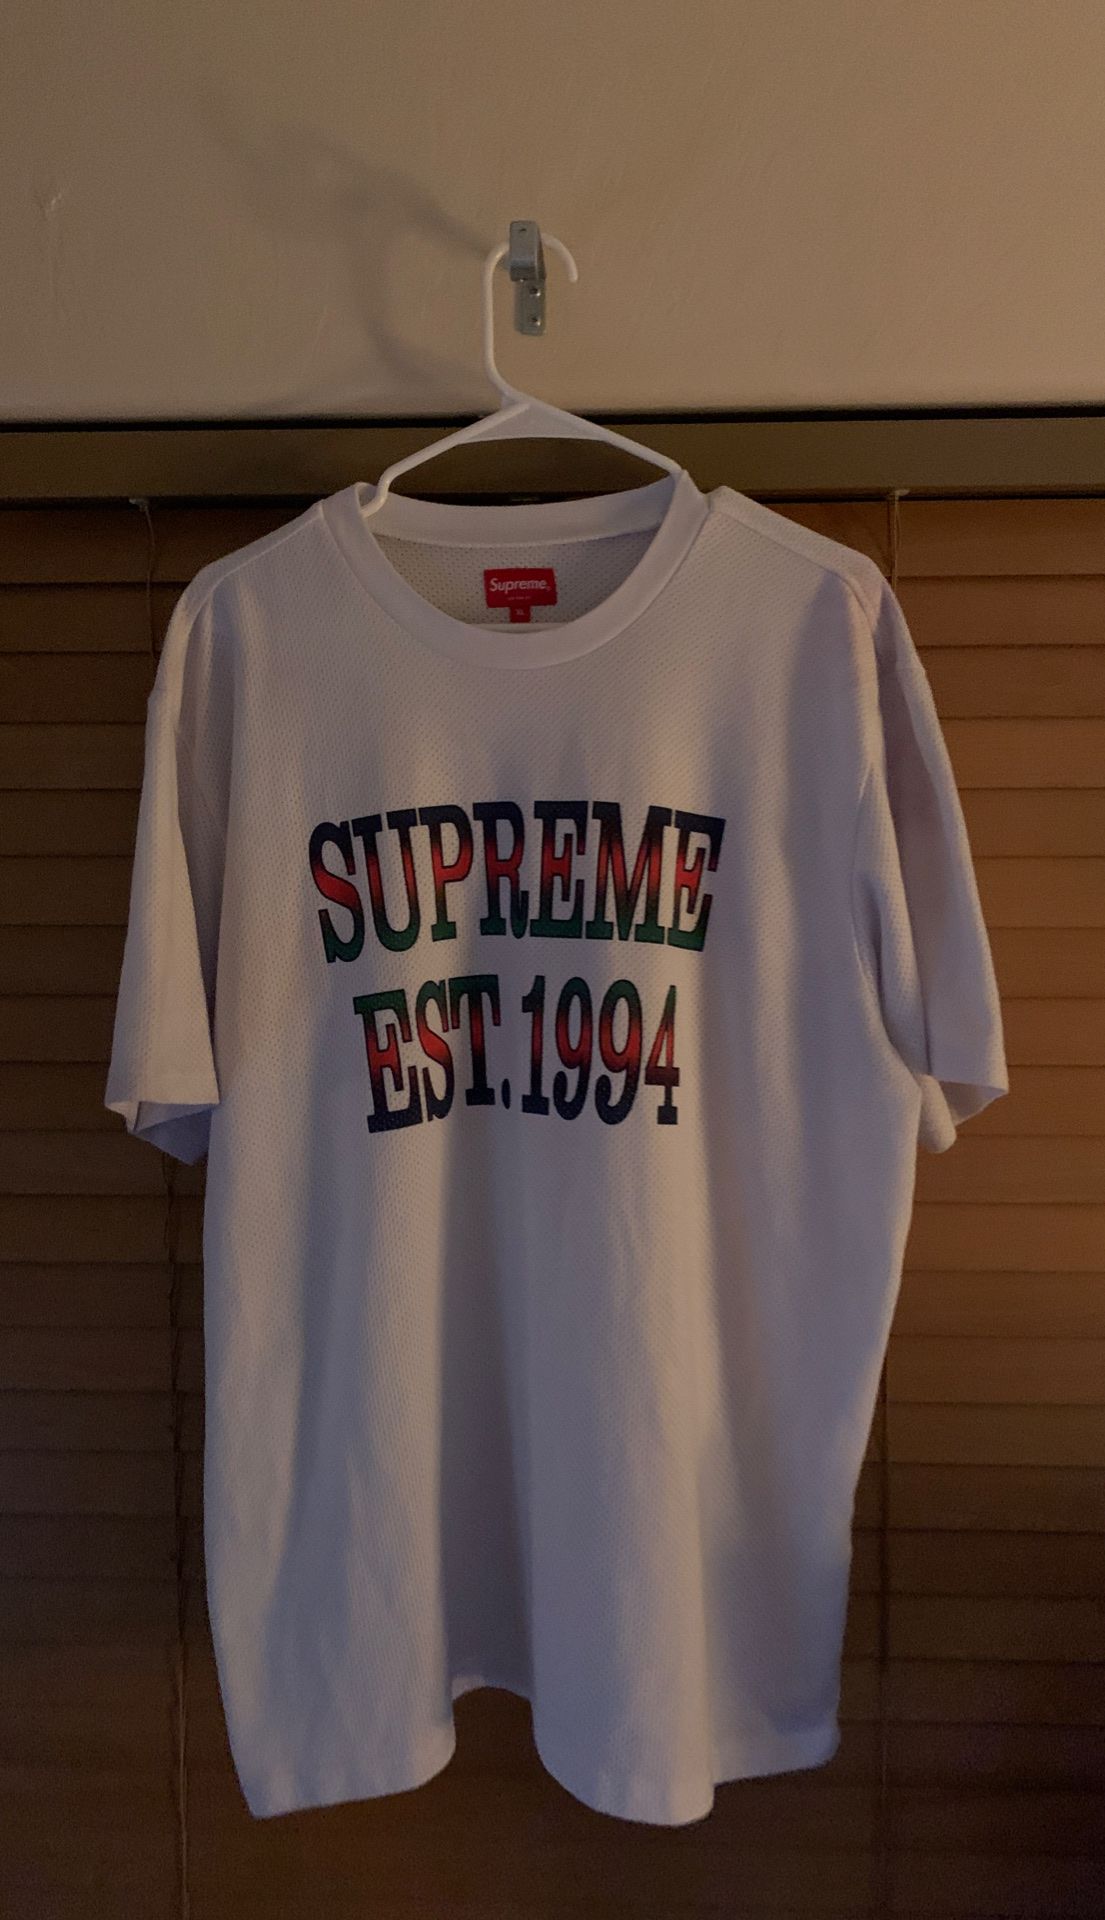 never worn. XL “supreme Est 1994” mesh shirt